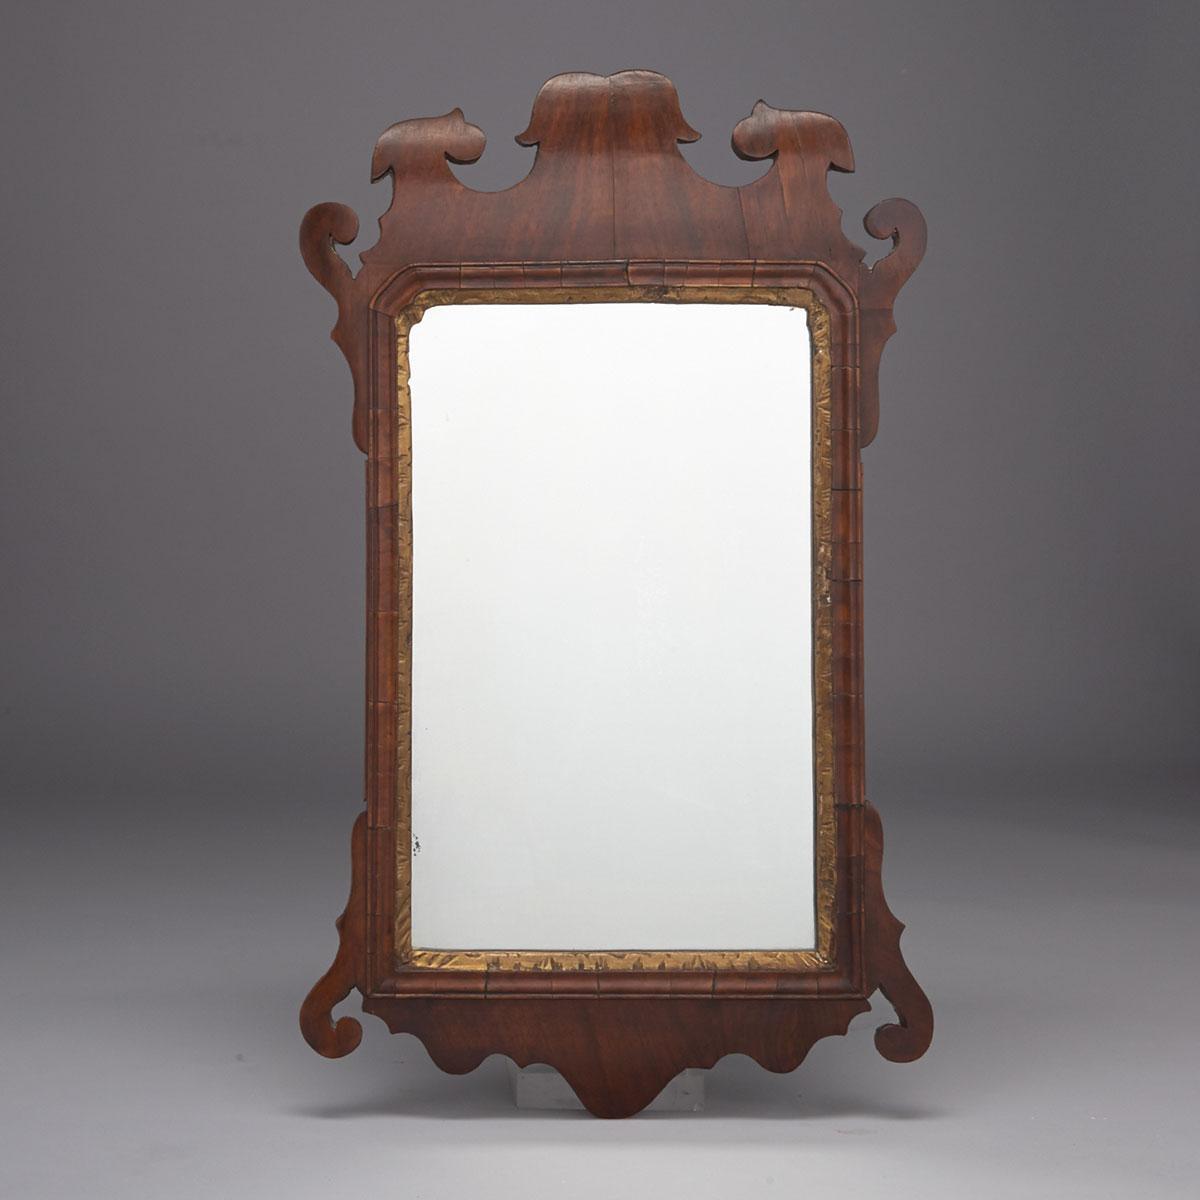 George III Parcel Gilt Mahogany Fretwork Shaving Mirror, late 18th century